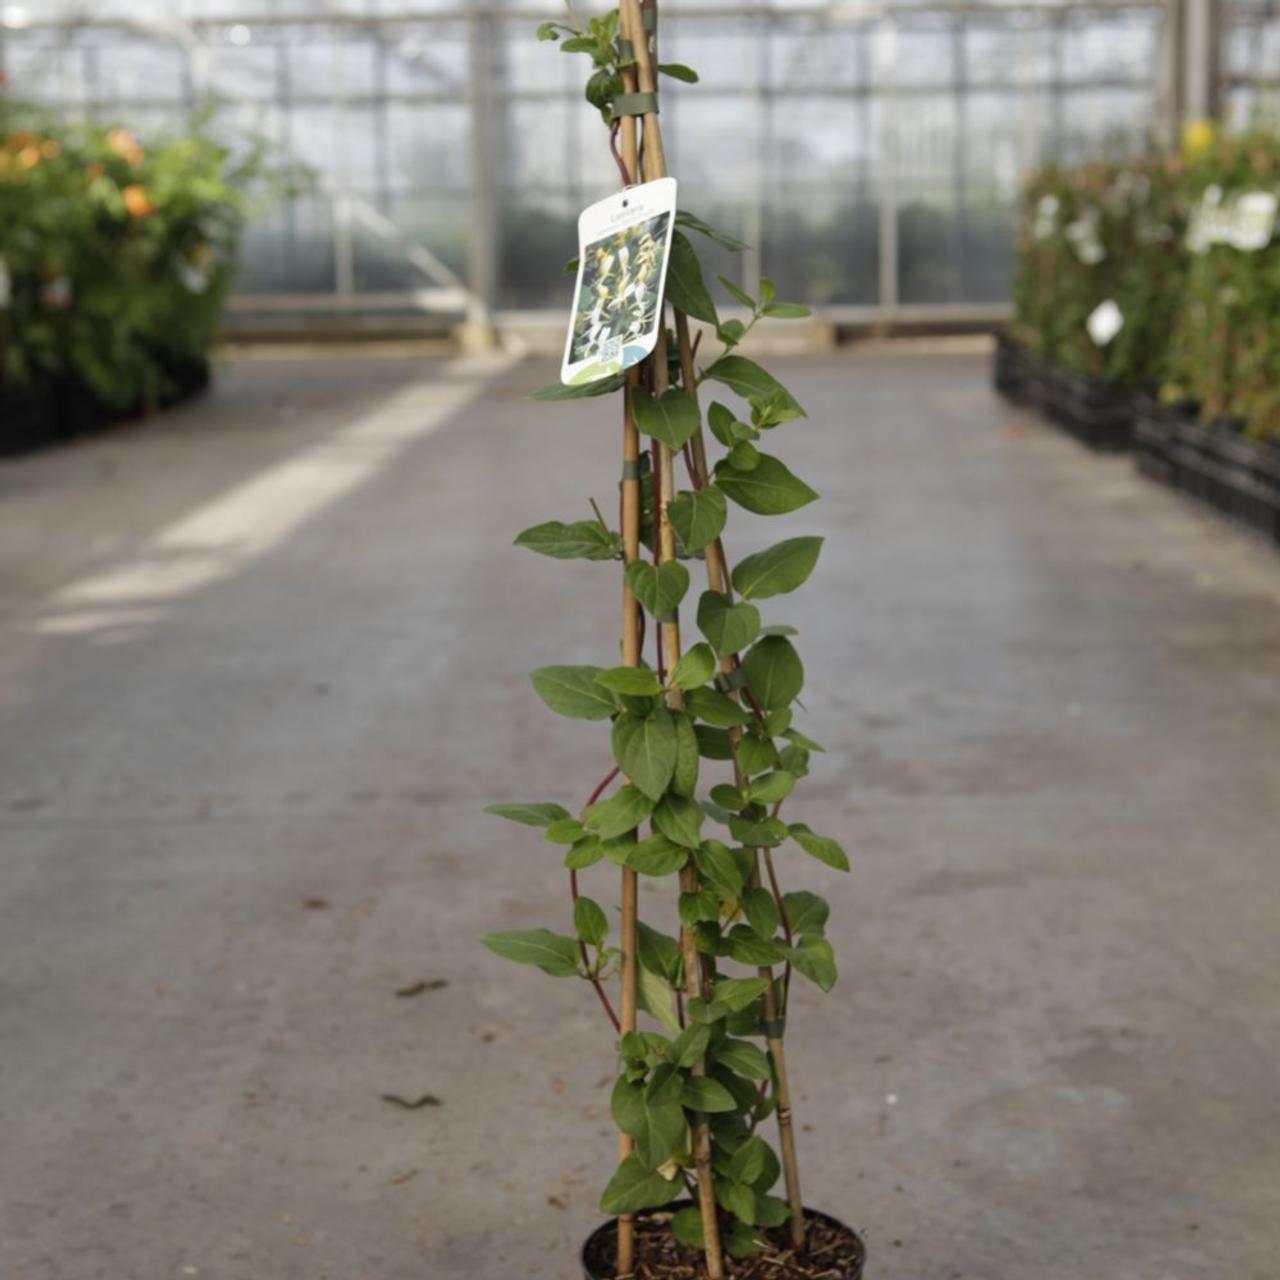 Lonicera japonica 'Hall's Prolific' plant